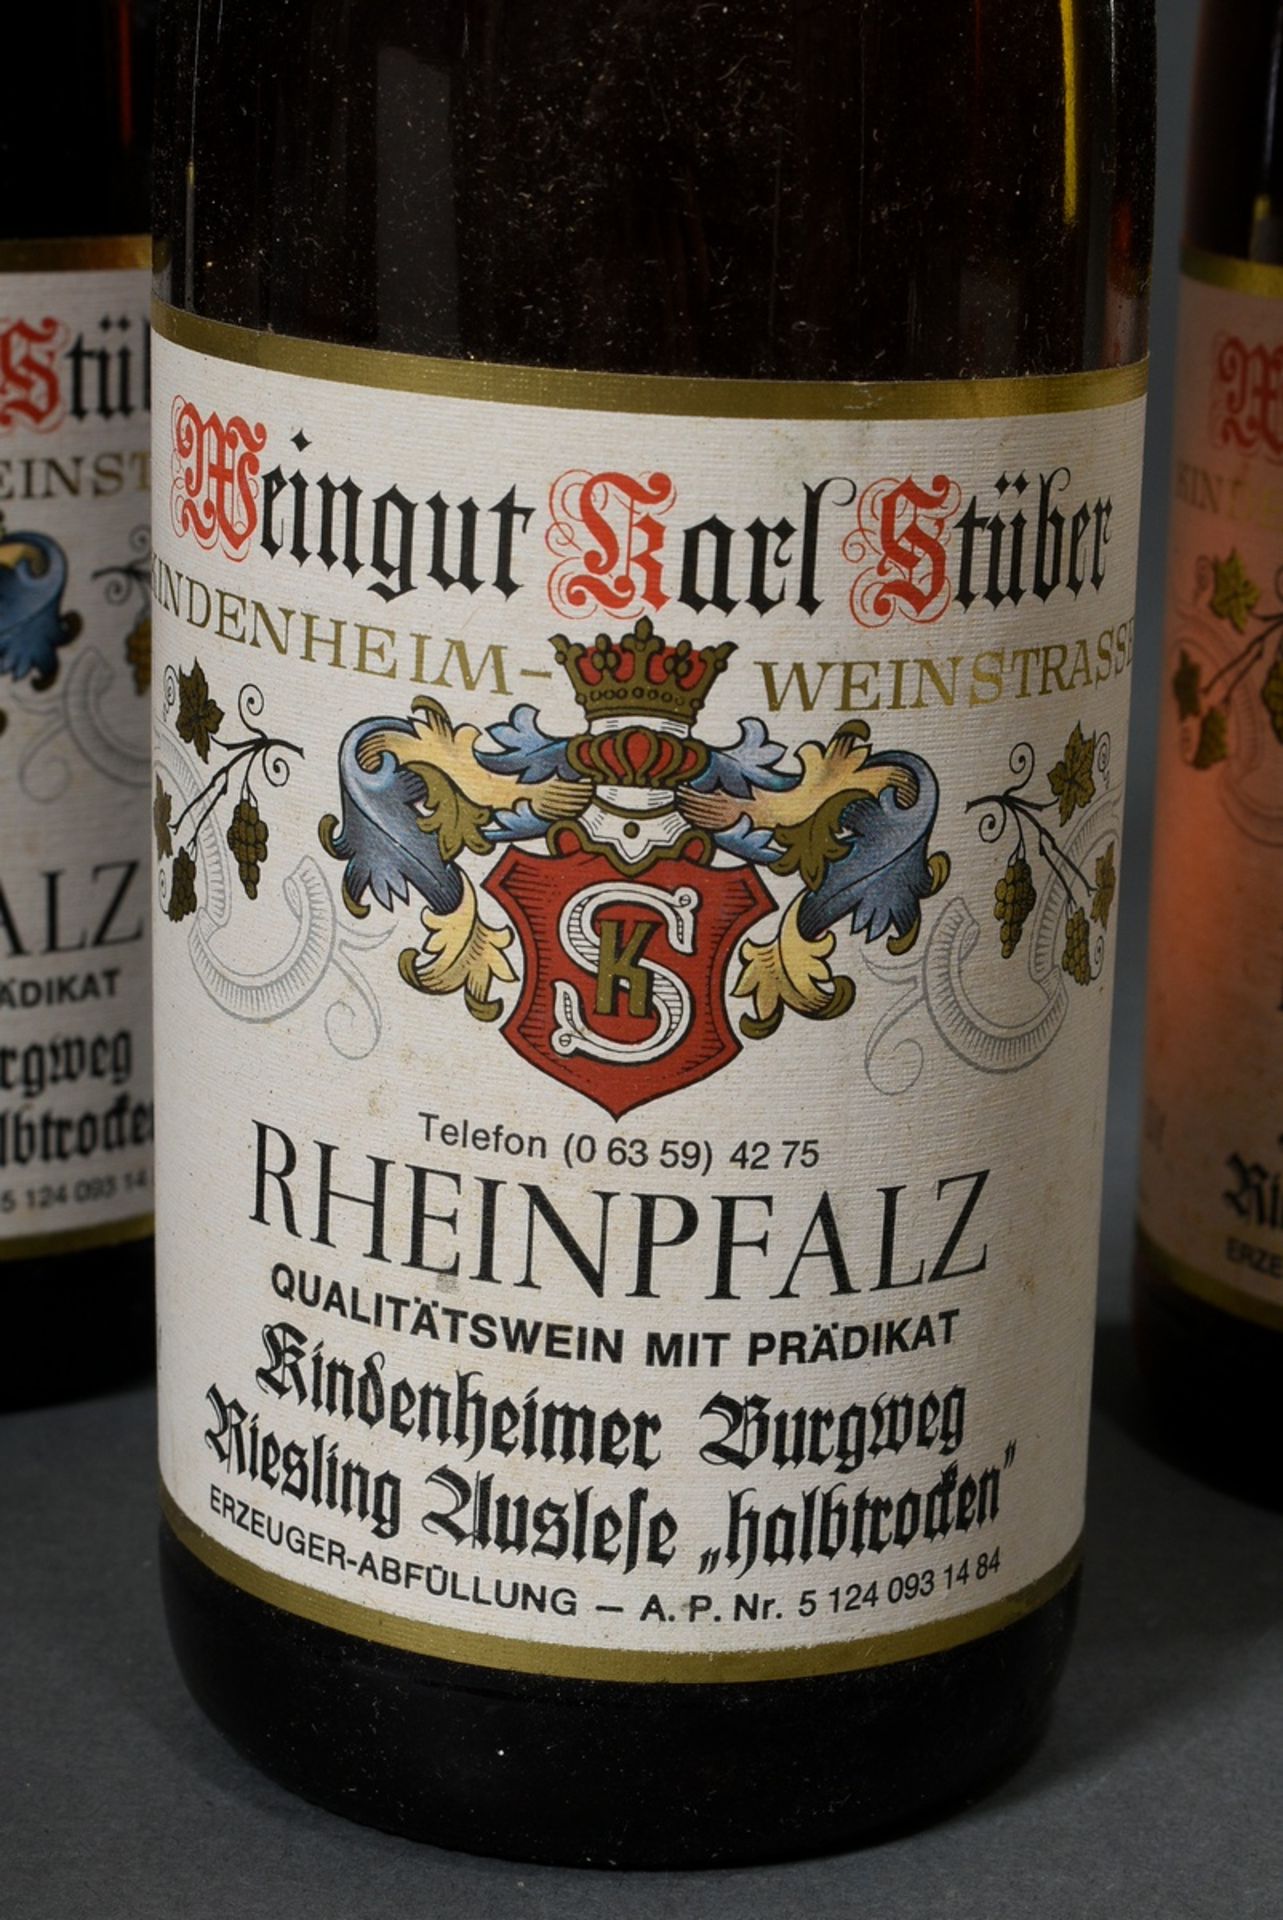 8 bottles 1983 white wine "Riesling Auslese", semi-dry, Winery Karl Stüber, Kindenheim Weinstrasse, - Image 2 of 4